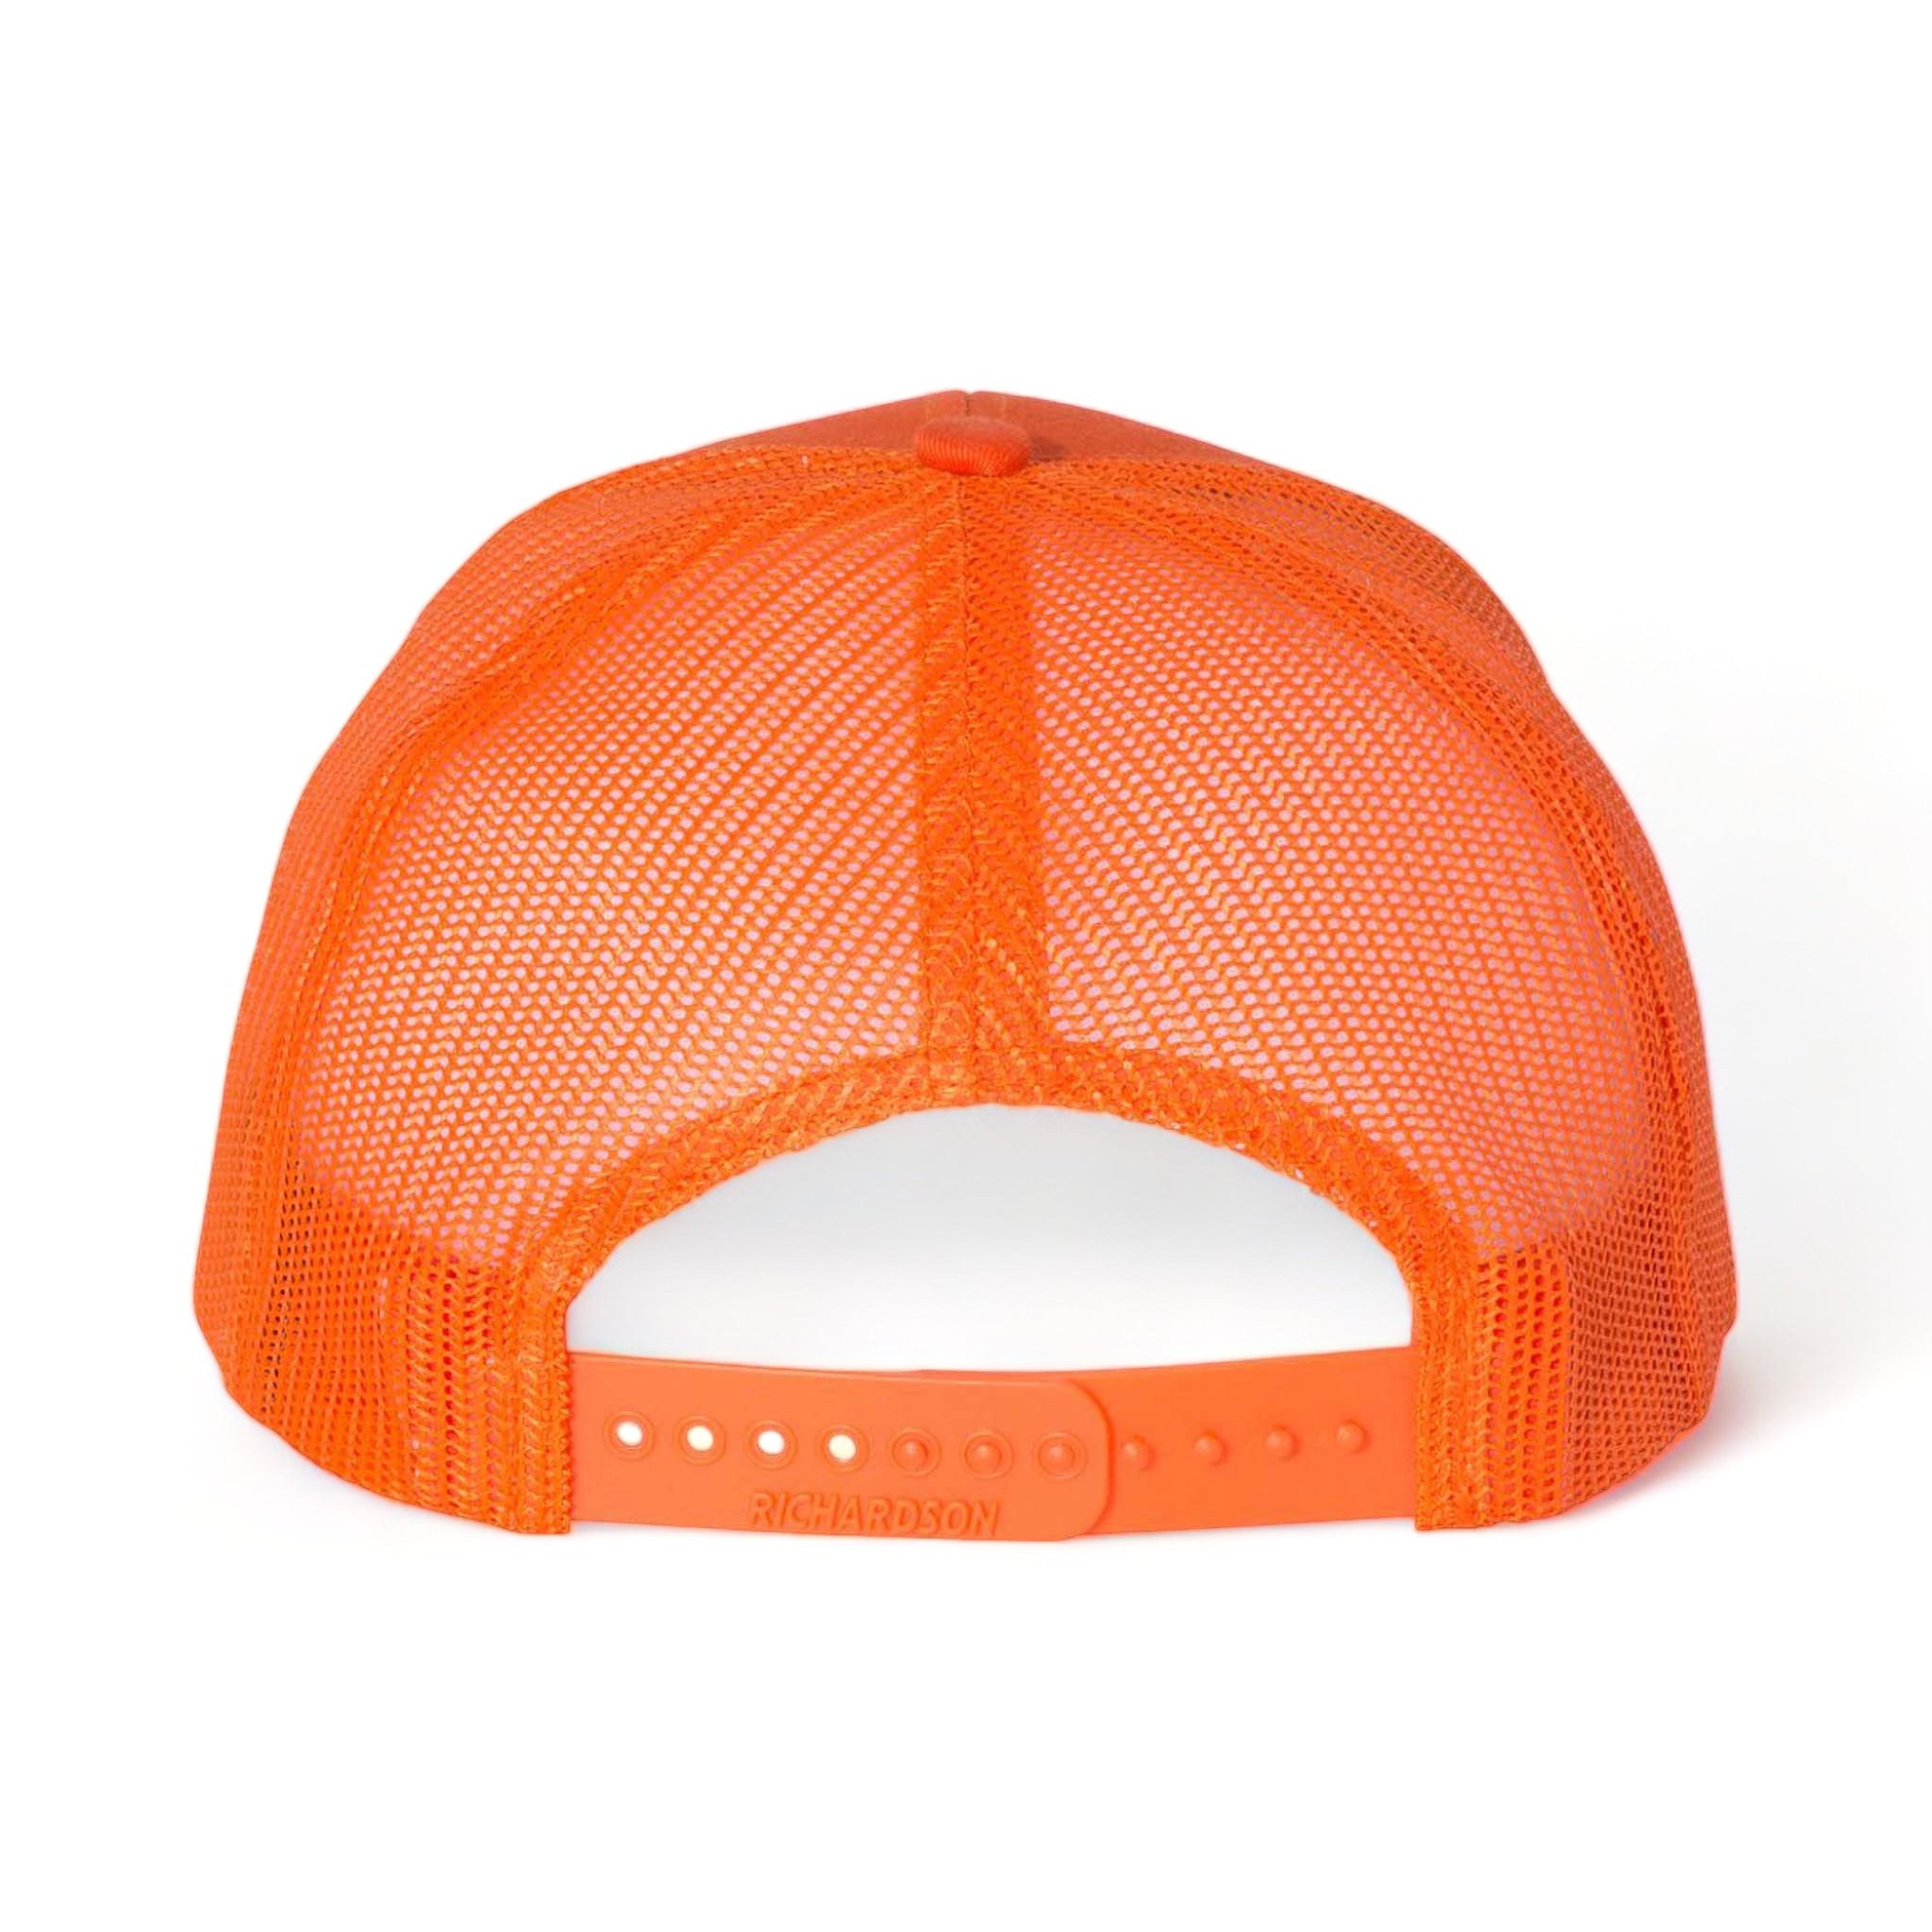 Back view of Richardson 112 custom hat in orange